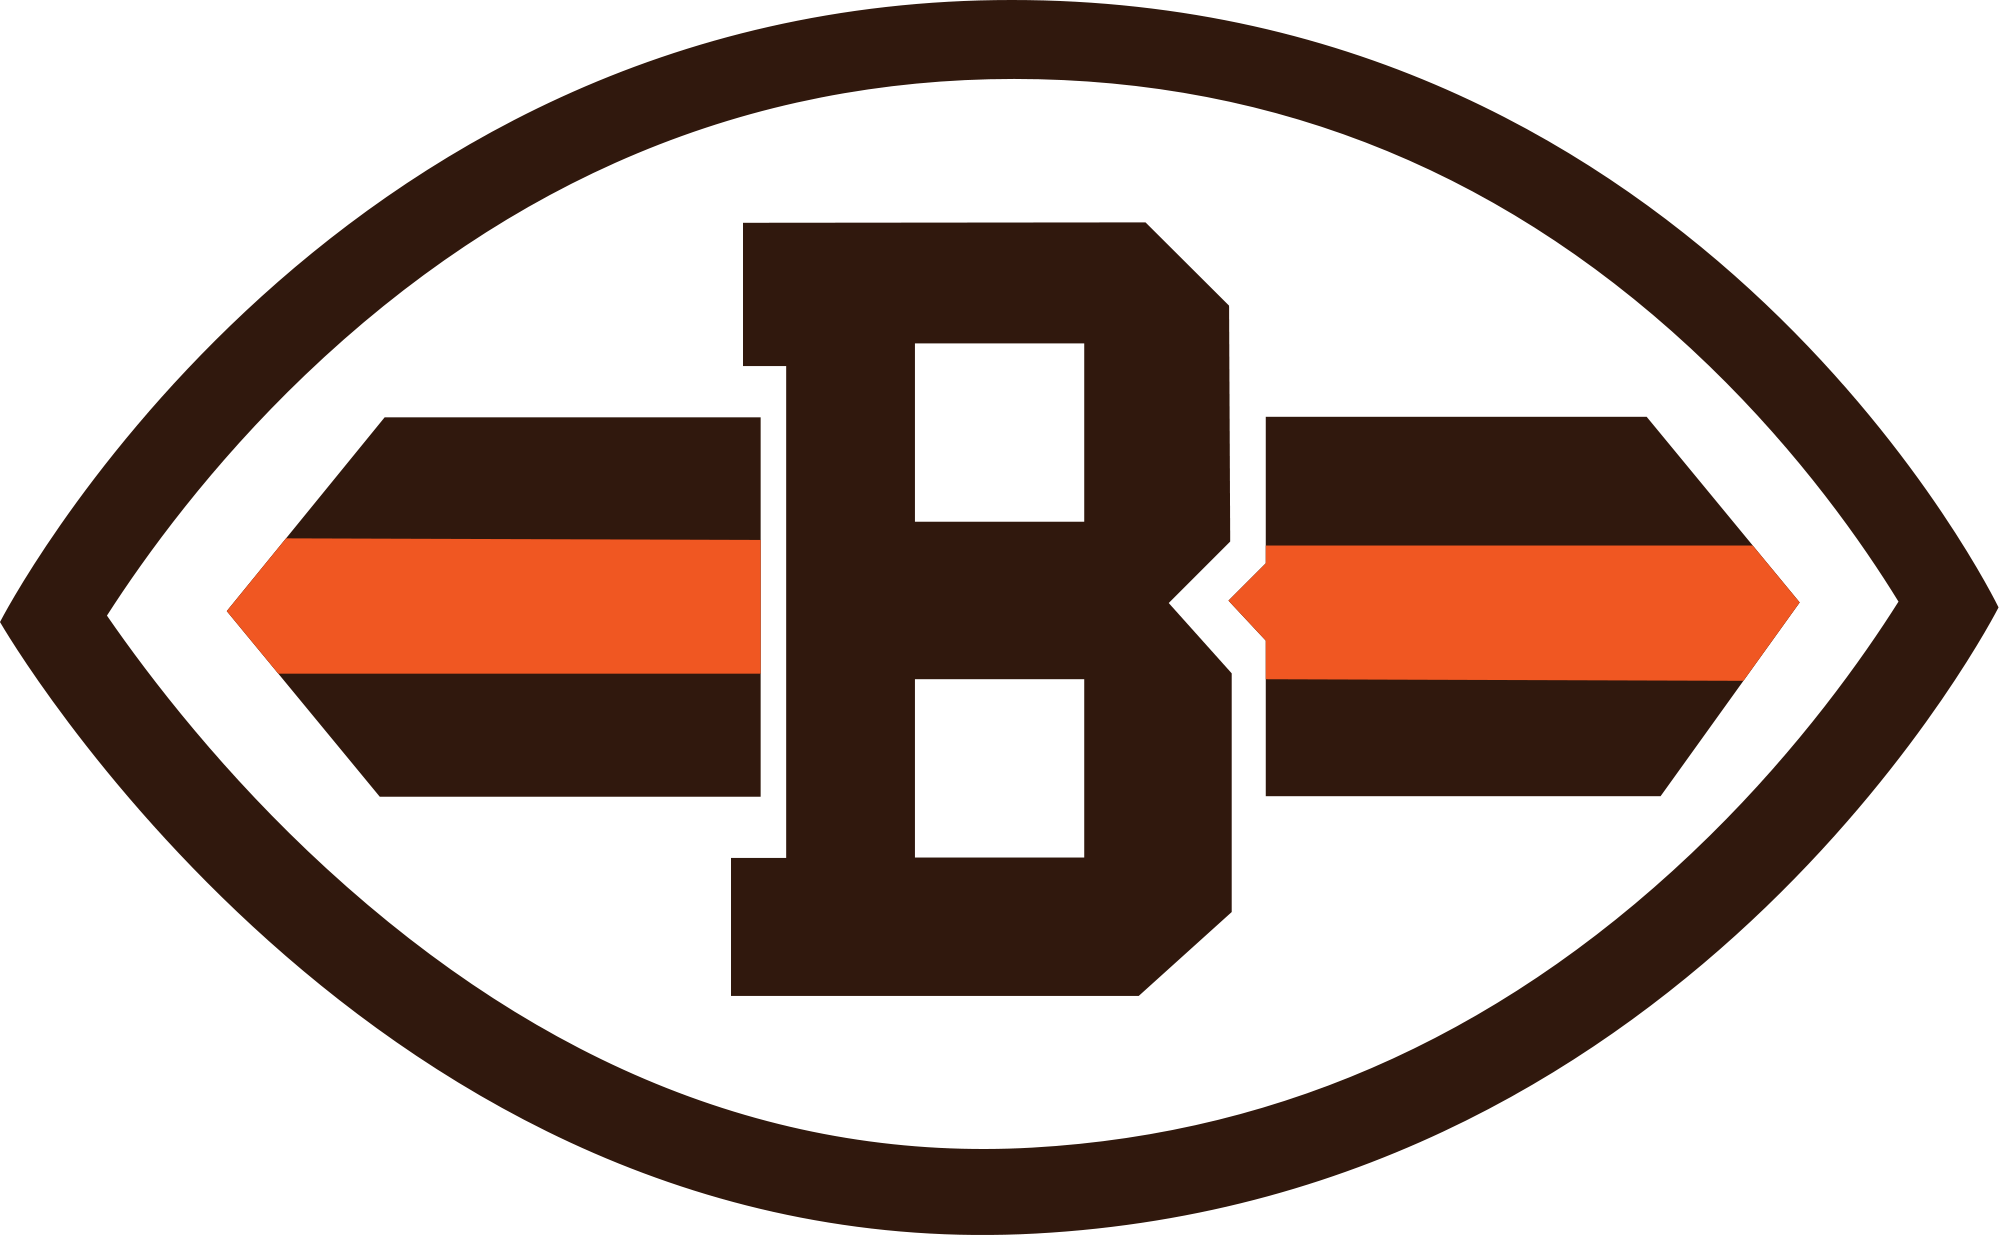 Image - Cleveland Browns Helm